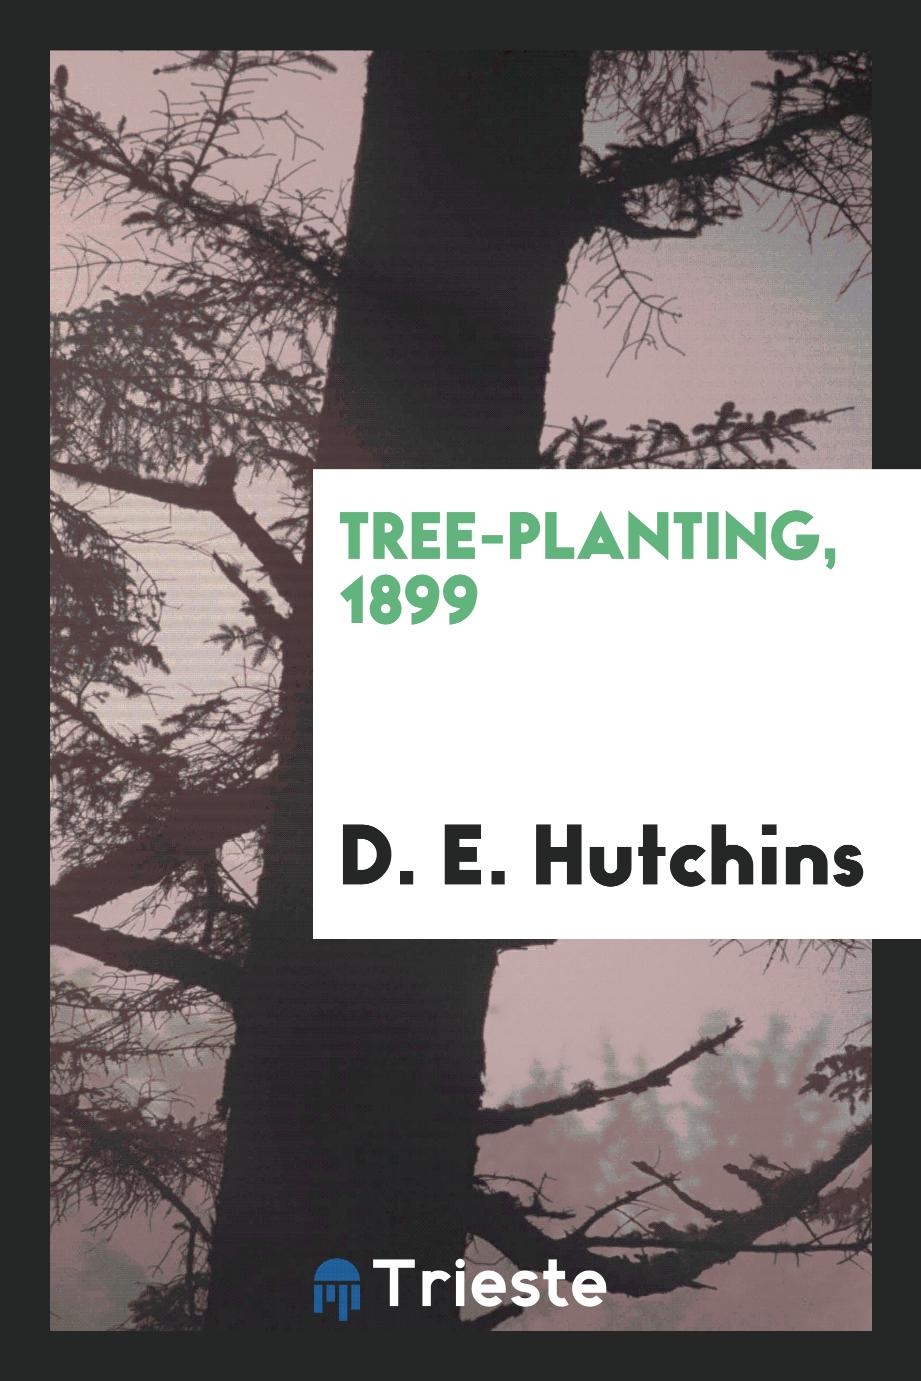 Tree-Planting, 1899